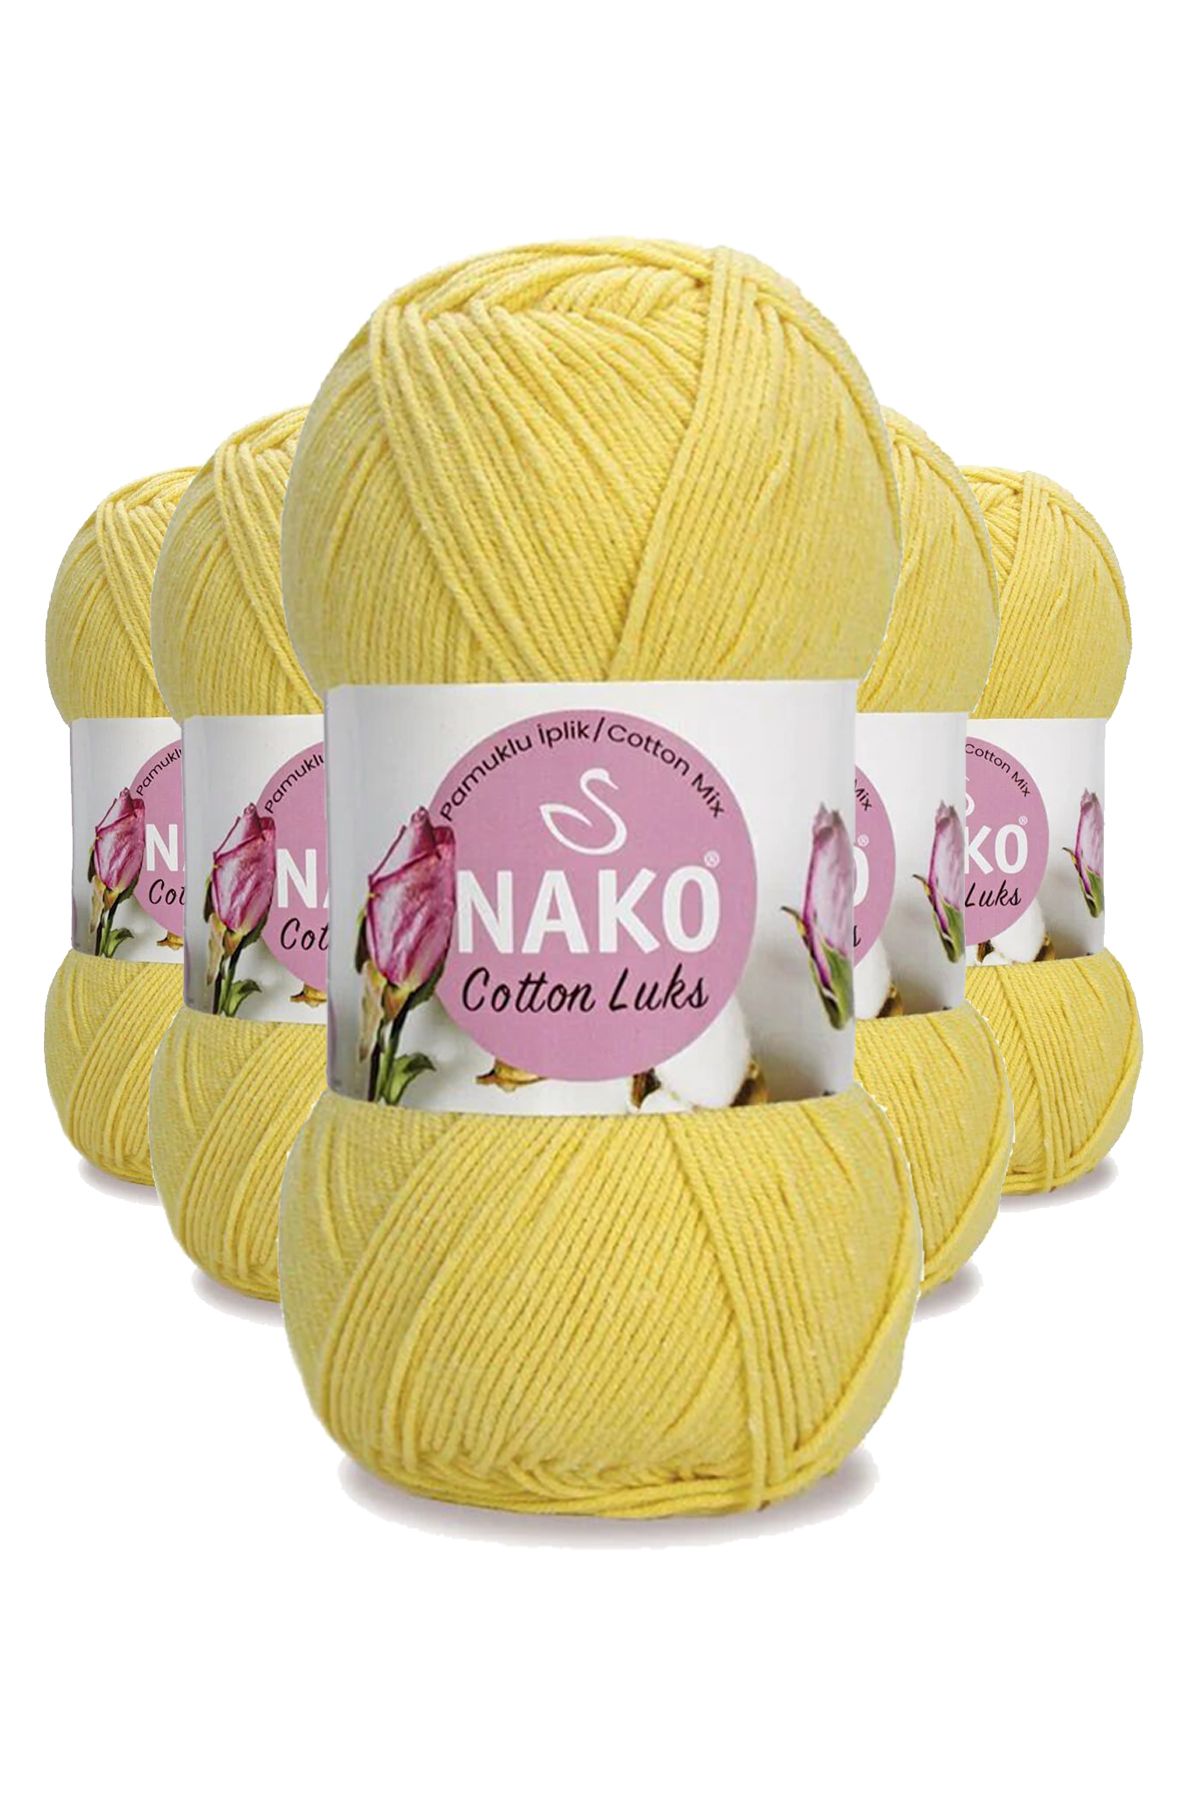 Nako 5 Adet Cotton Lüks Yelek Tunik Kazak Bluz Hırka İpi Yünü Açık Sarı 97554